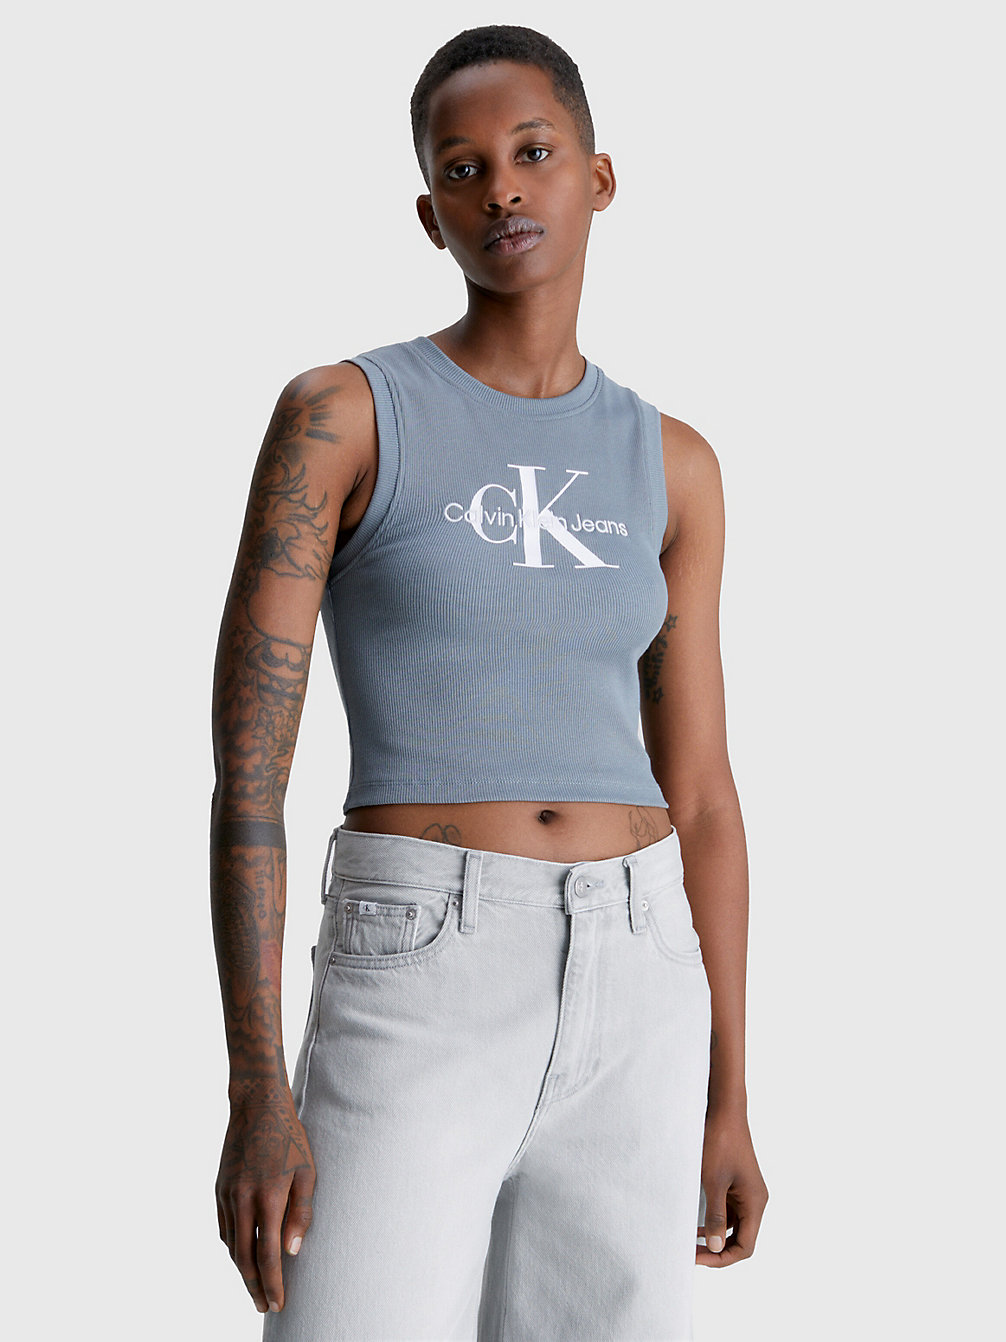 OVERCAST GREY > Cropped Monogram Tank Top > undefined Женщины - Calvin Klein